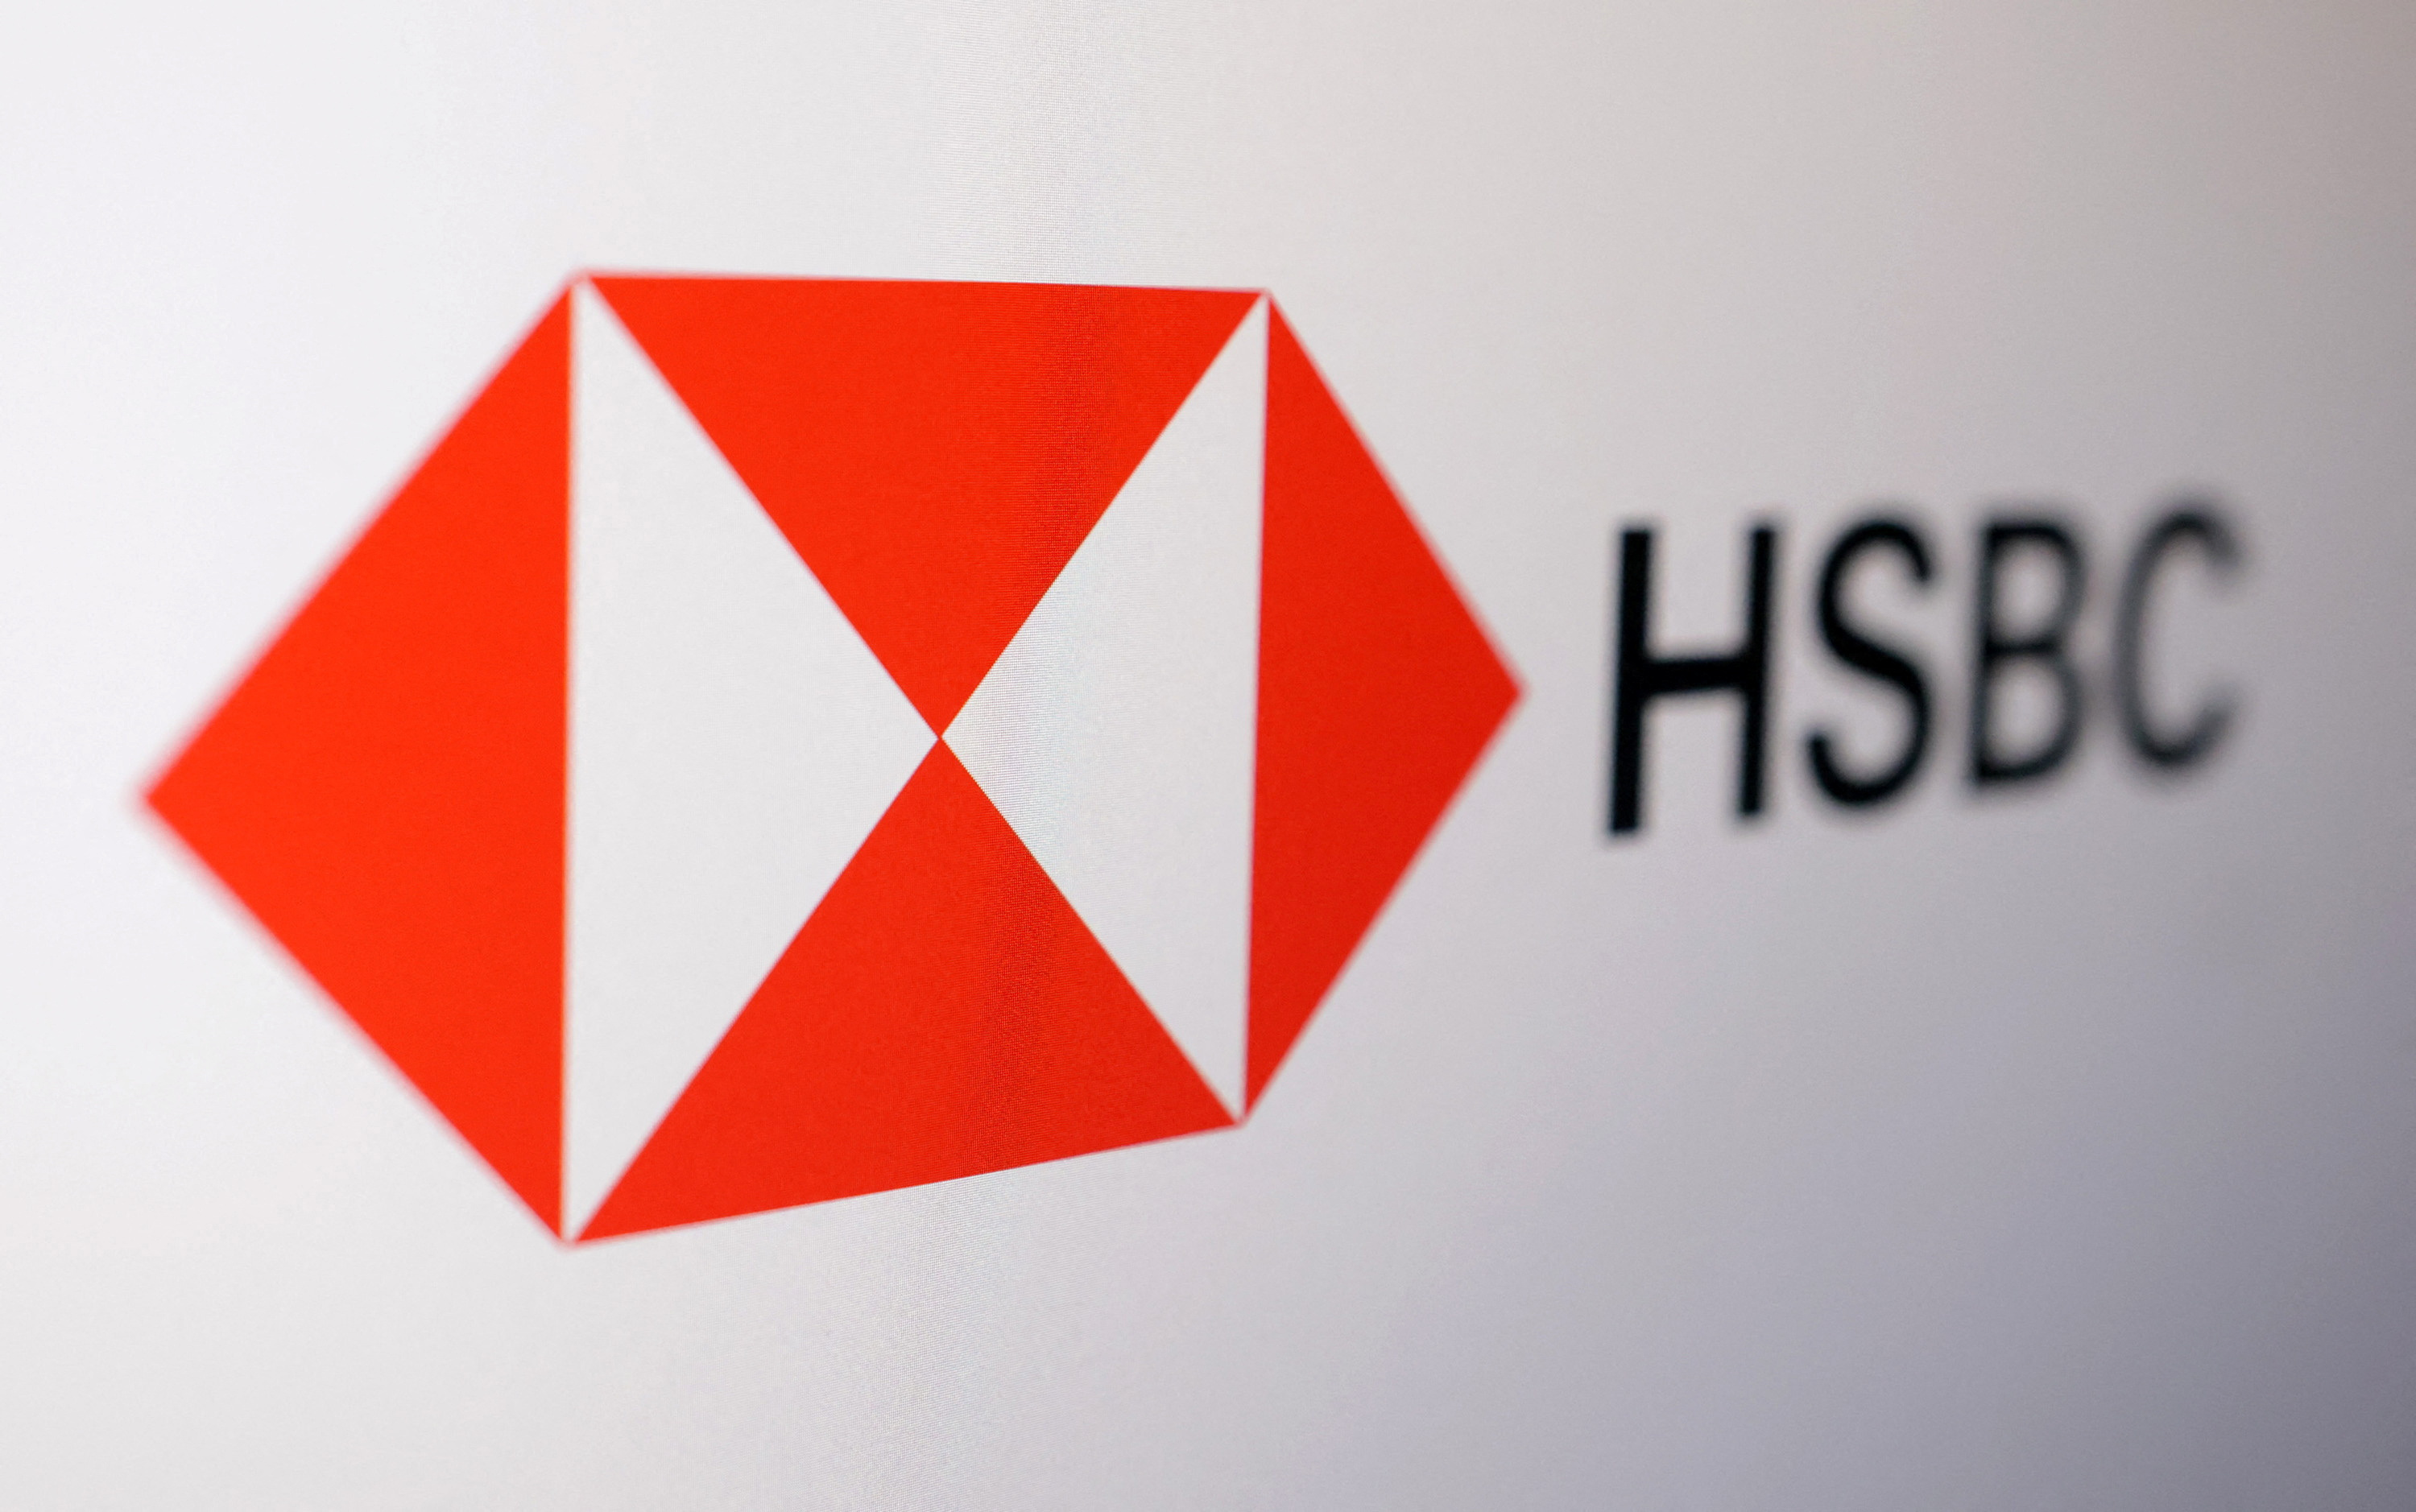 Illustration shows HSBC logo